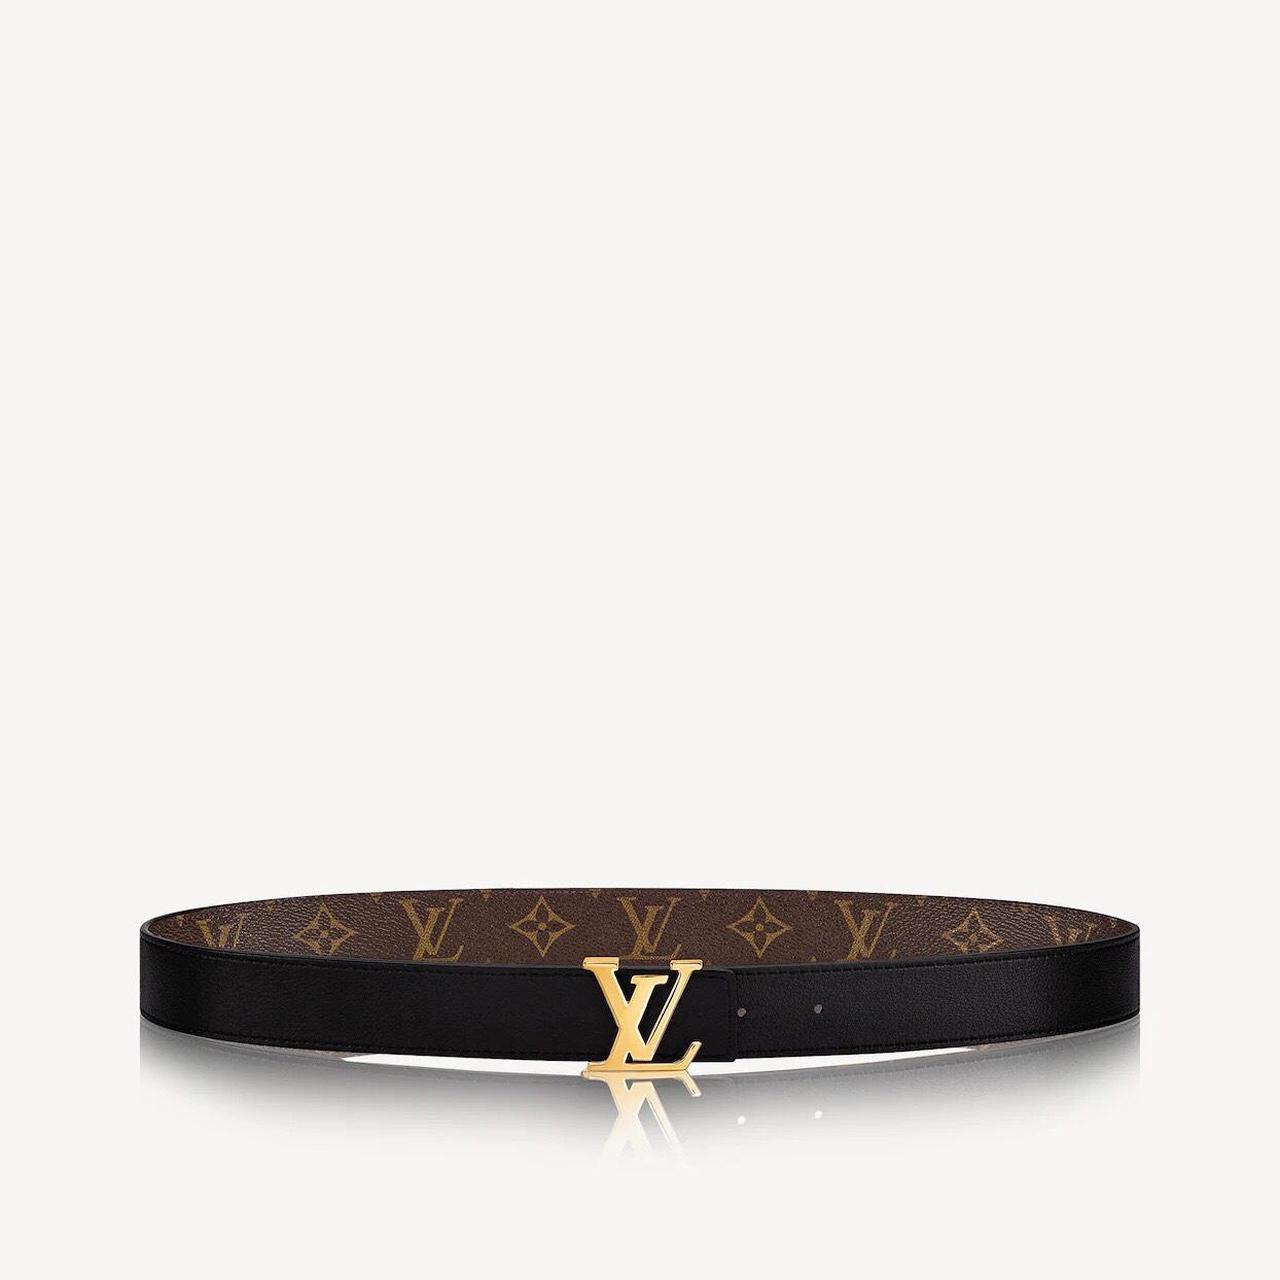 Louis Vuitton LV Initiales 40MM White Checker Belt - Depop